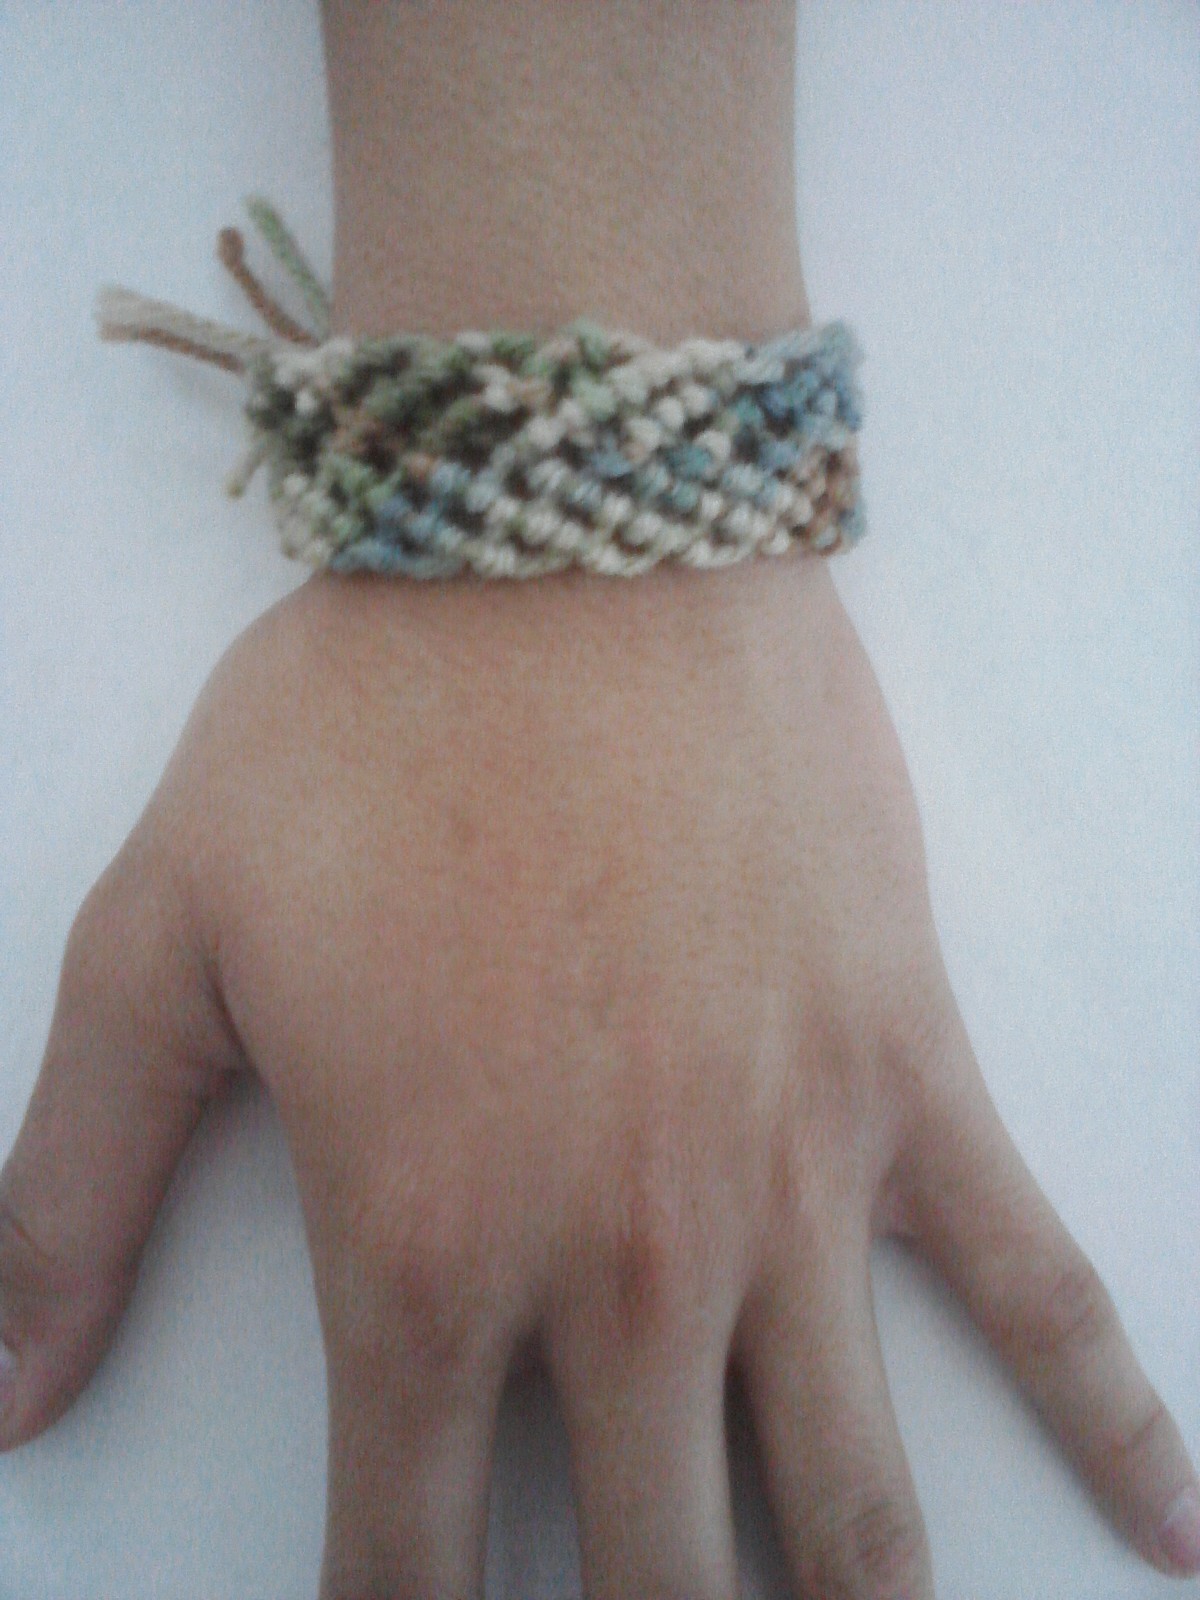 clean yarn bracelet picture for art class